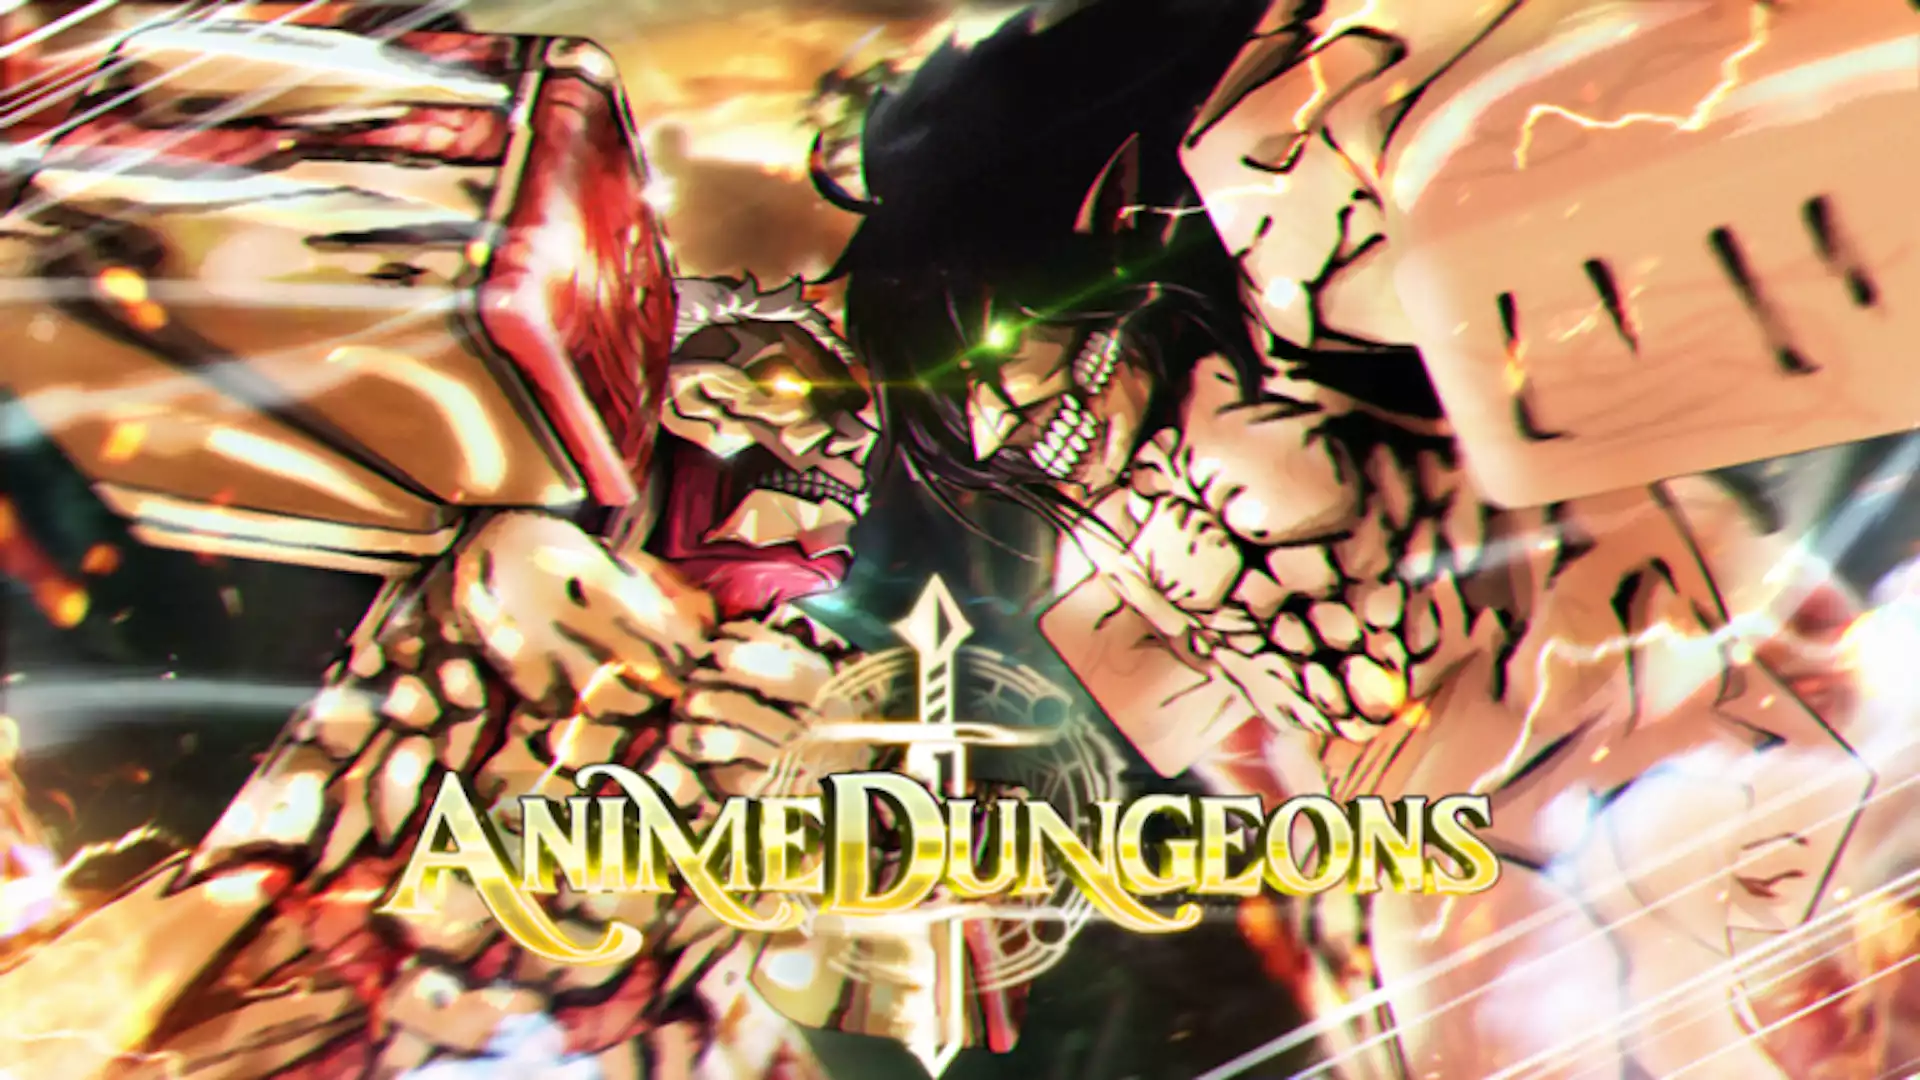 Anime Dungeons Codes December 2023 - RoCodes